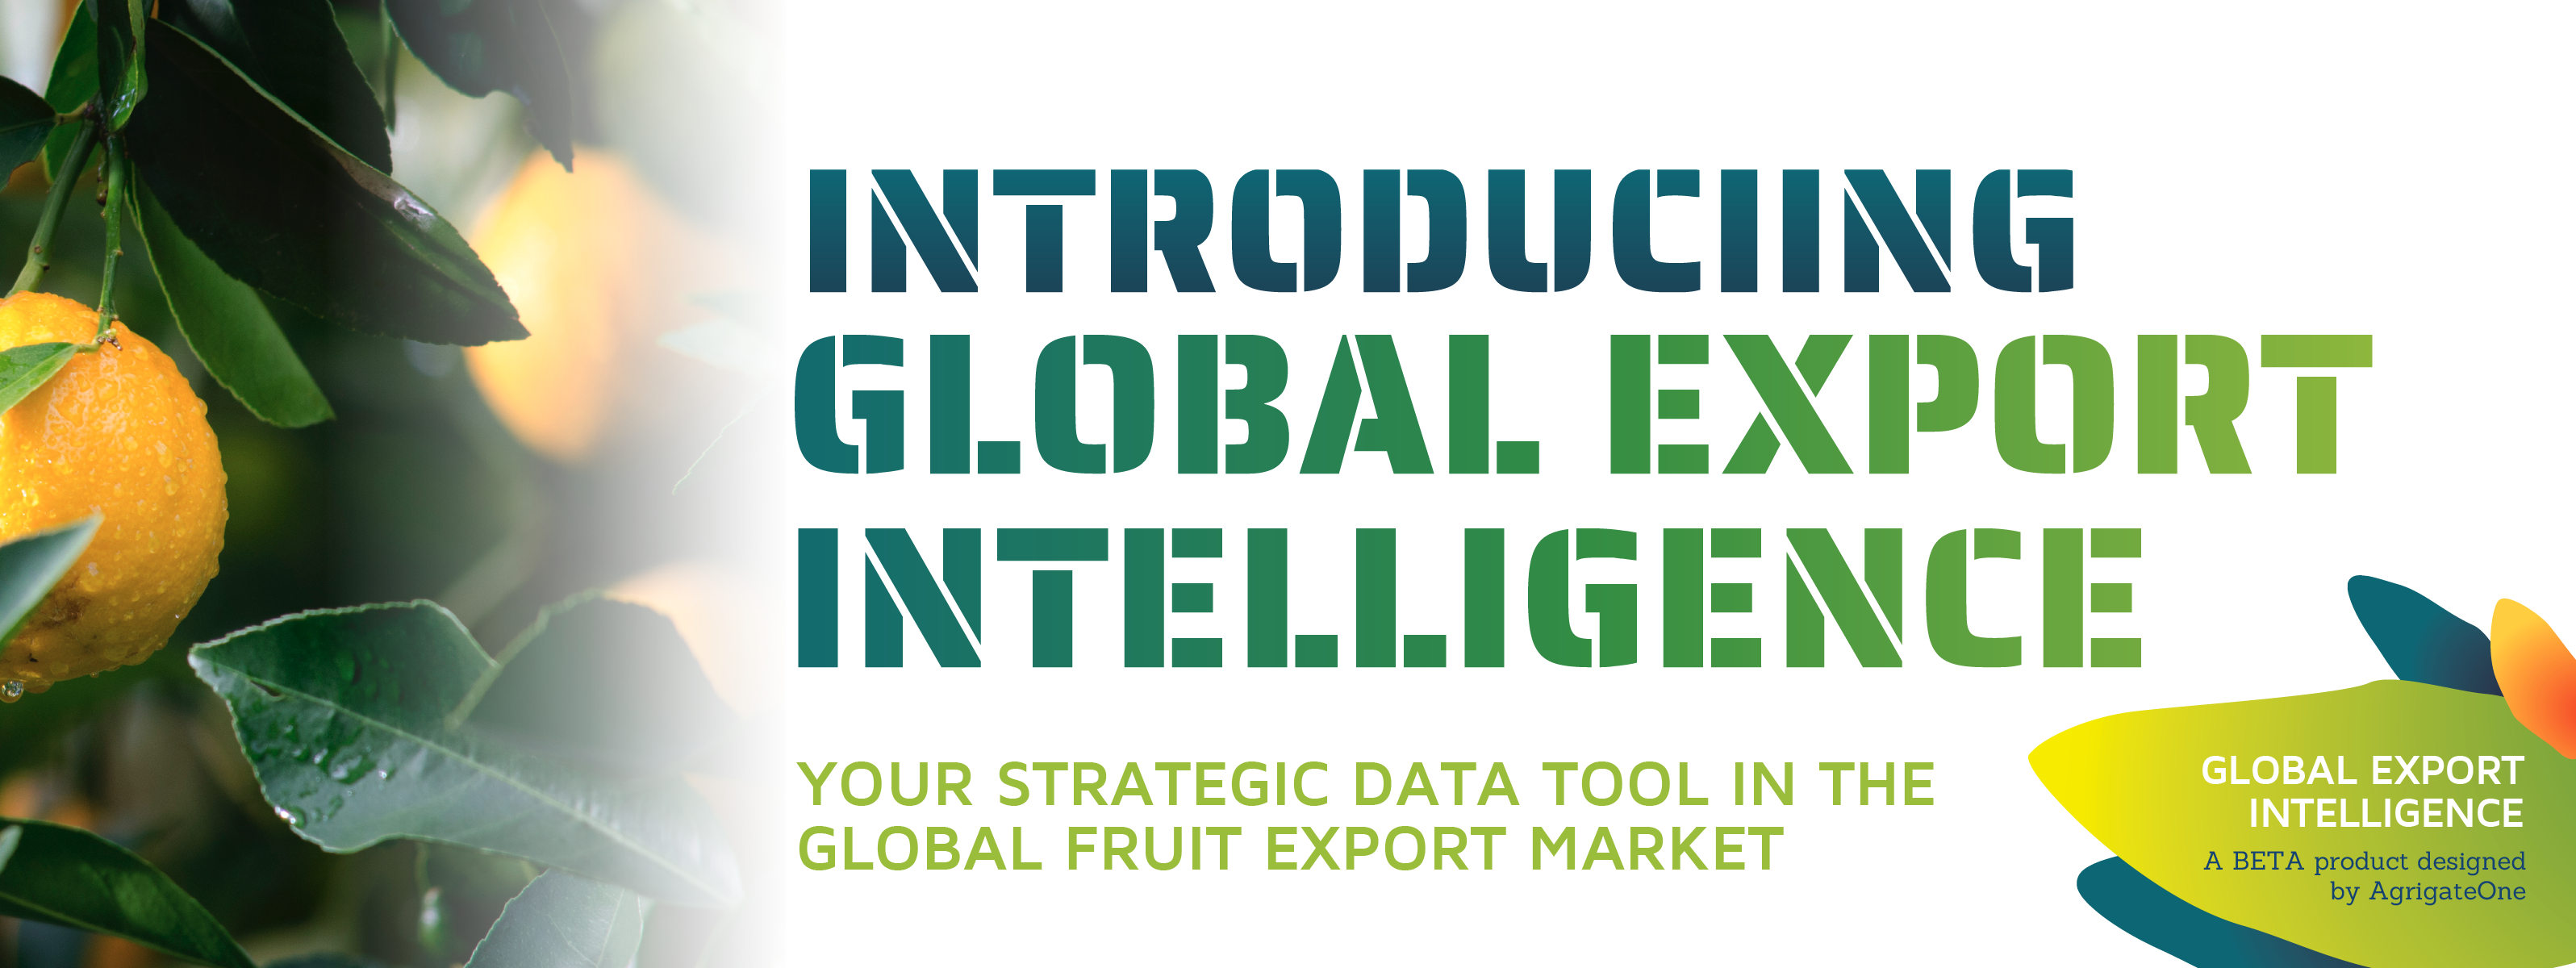 Global Export Intelligence